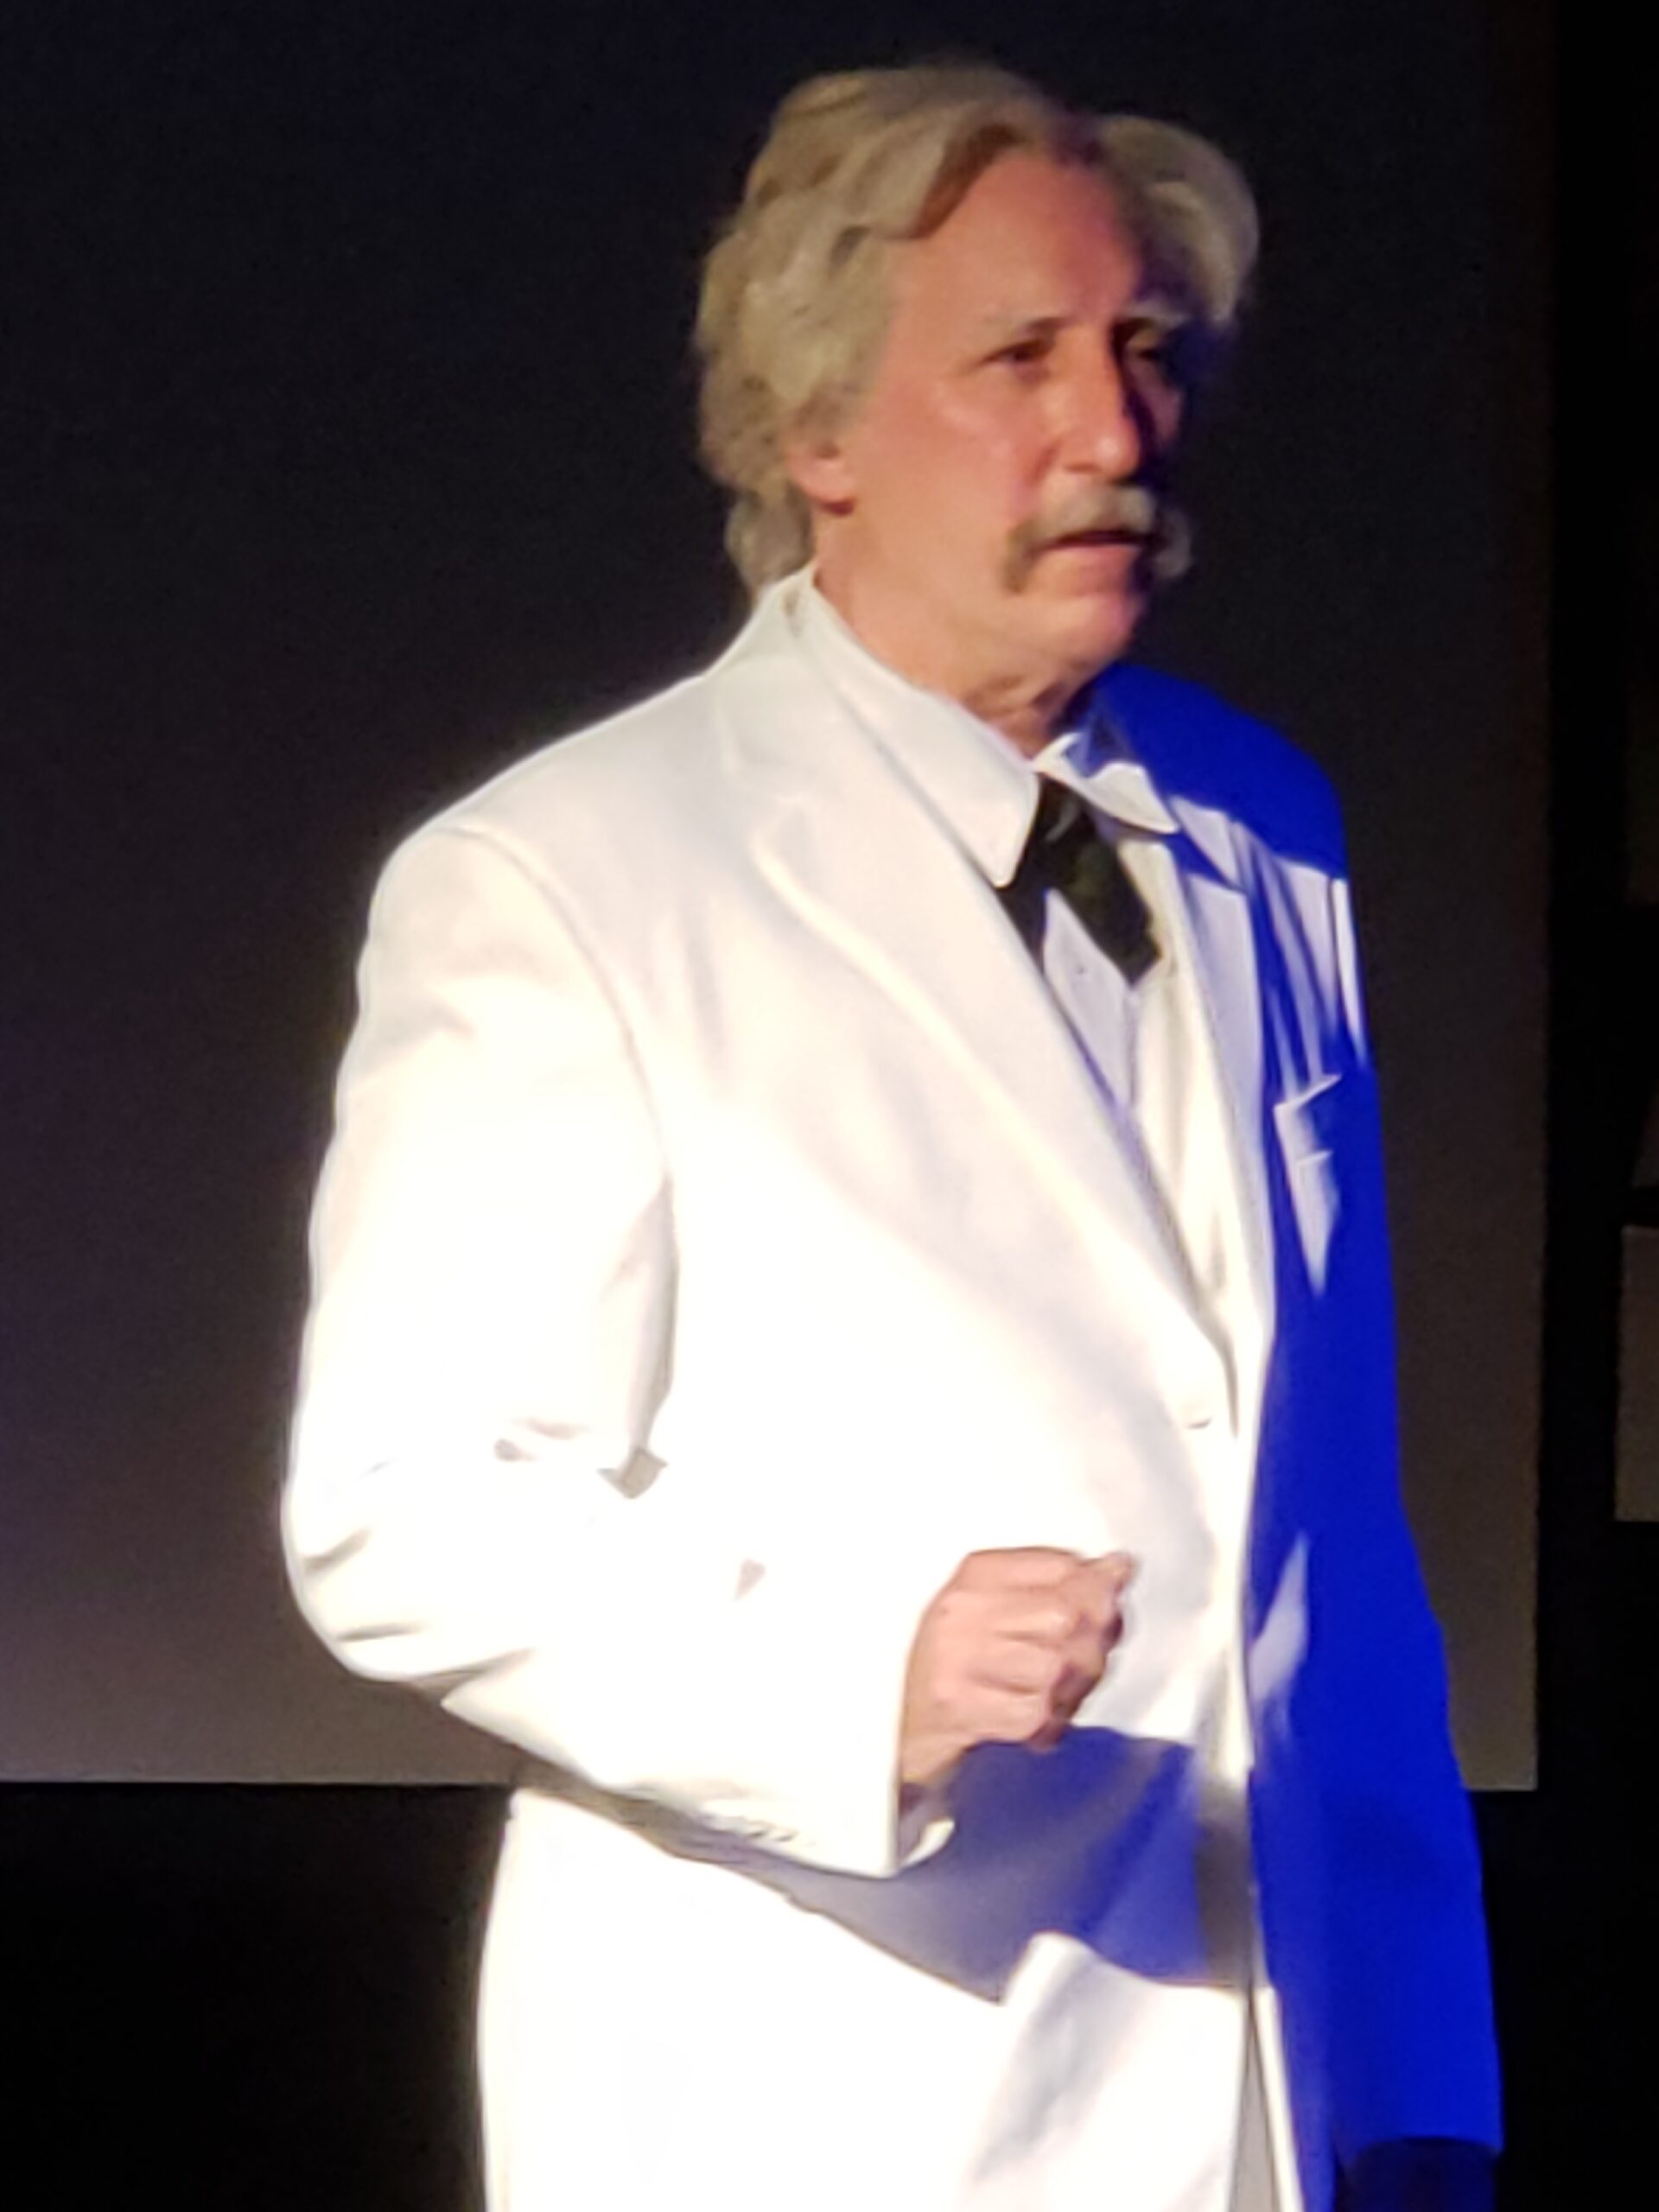 Joe Baer portrays Mark Twain, standing